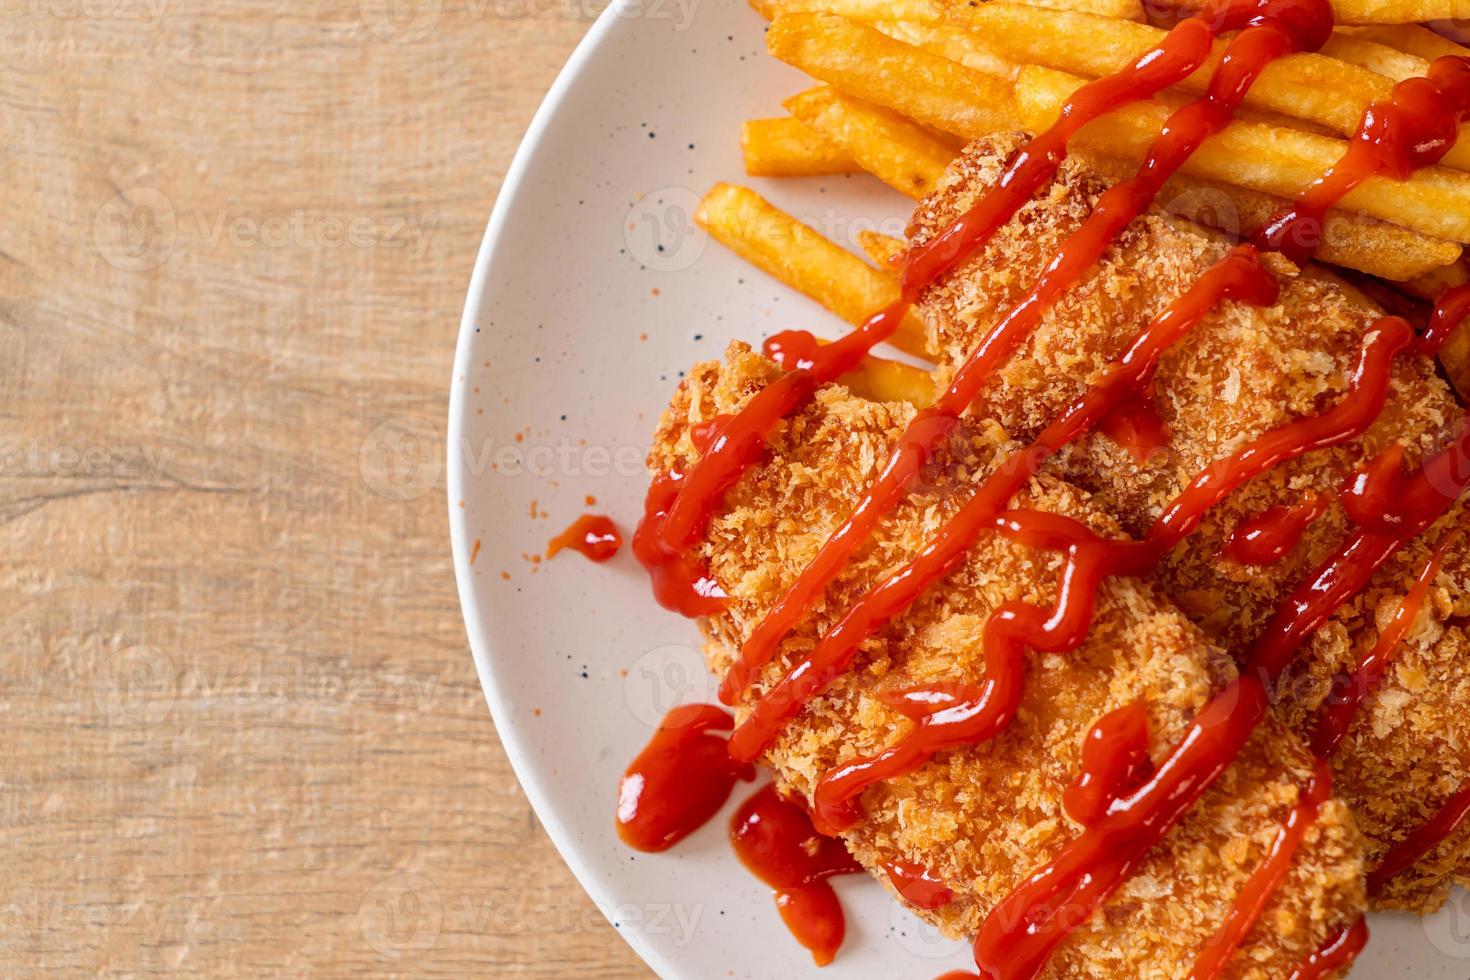 Filete de pechuga de pollo frito con papas fritas y salsa de tomate foto